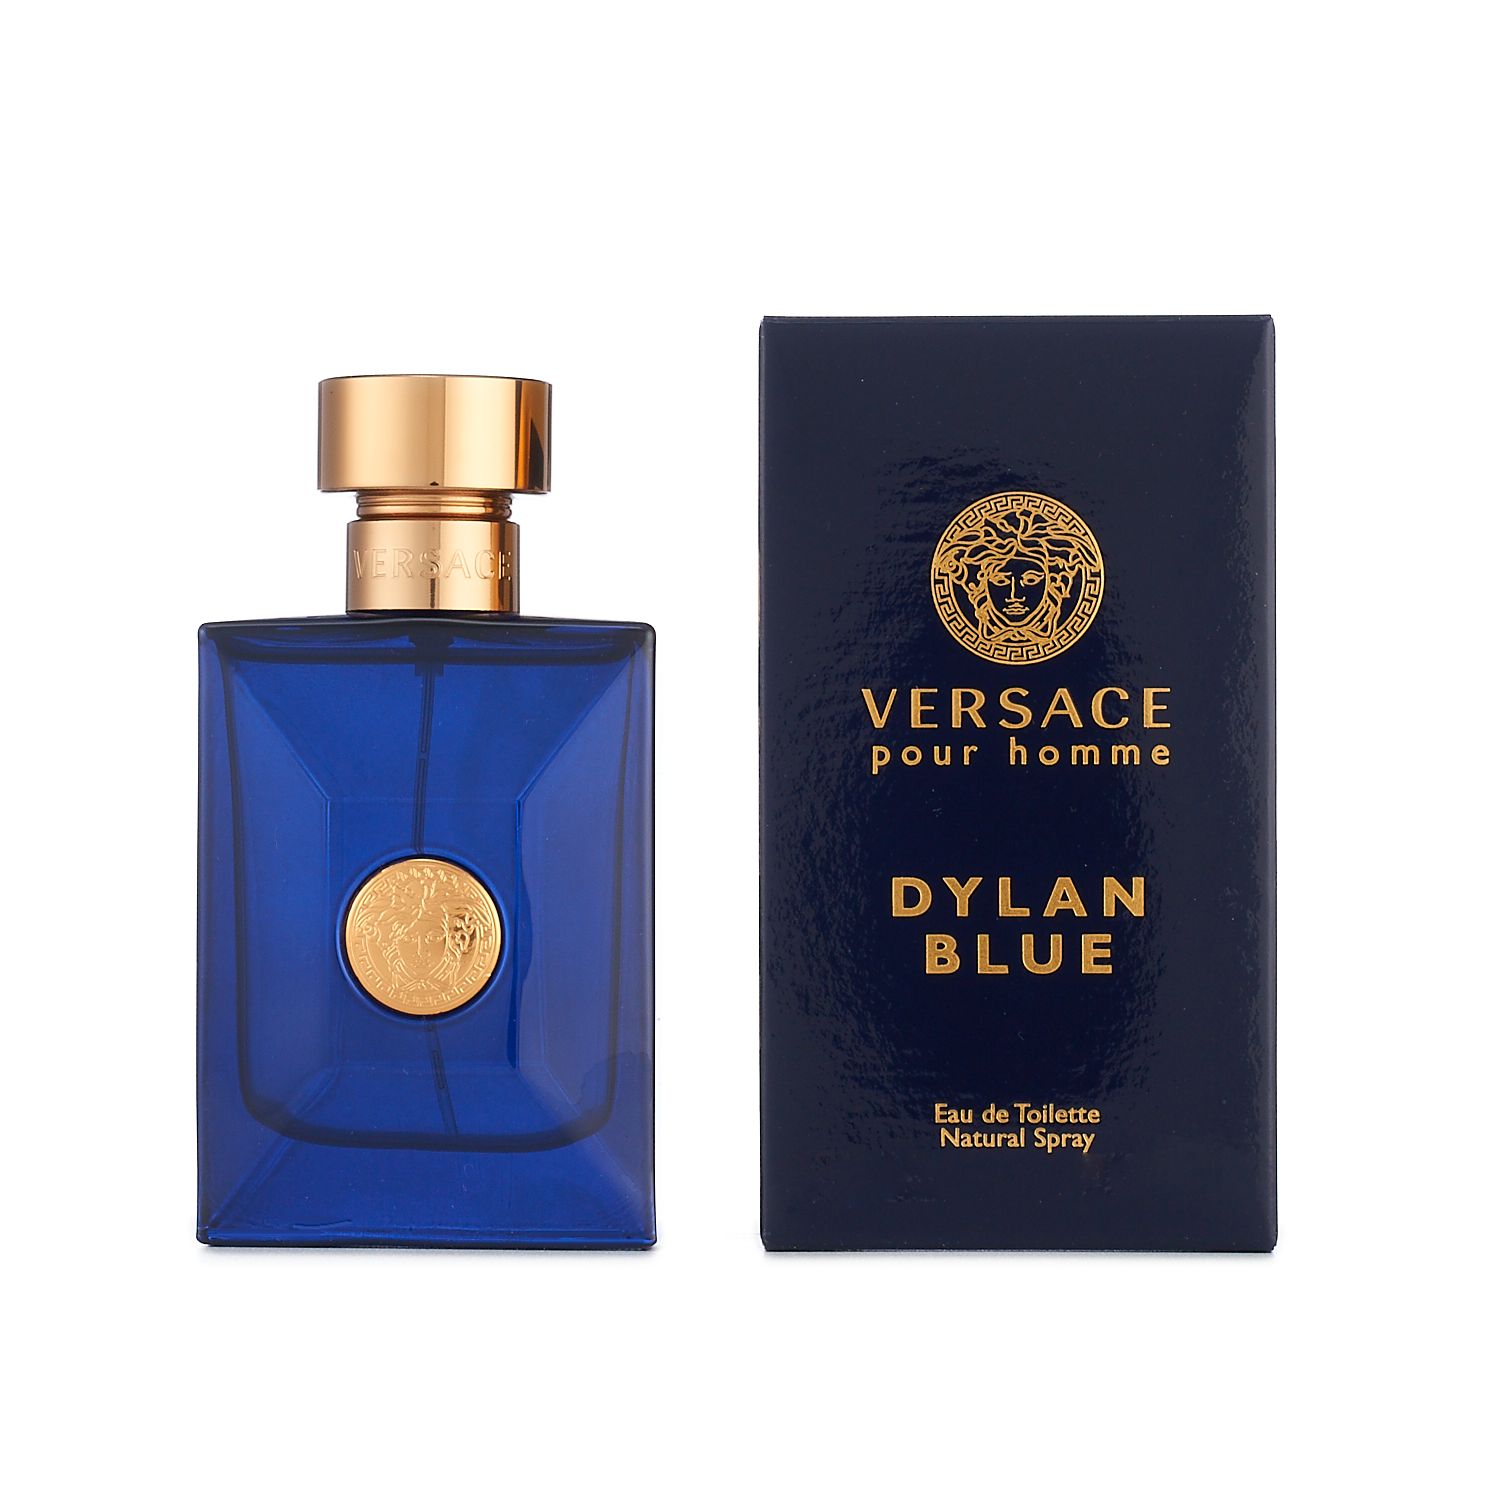 versace men's cologne dylan blue